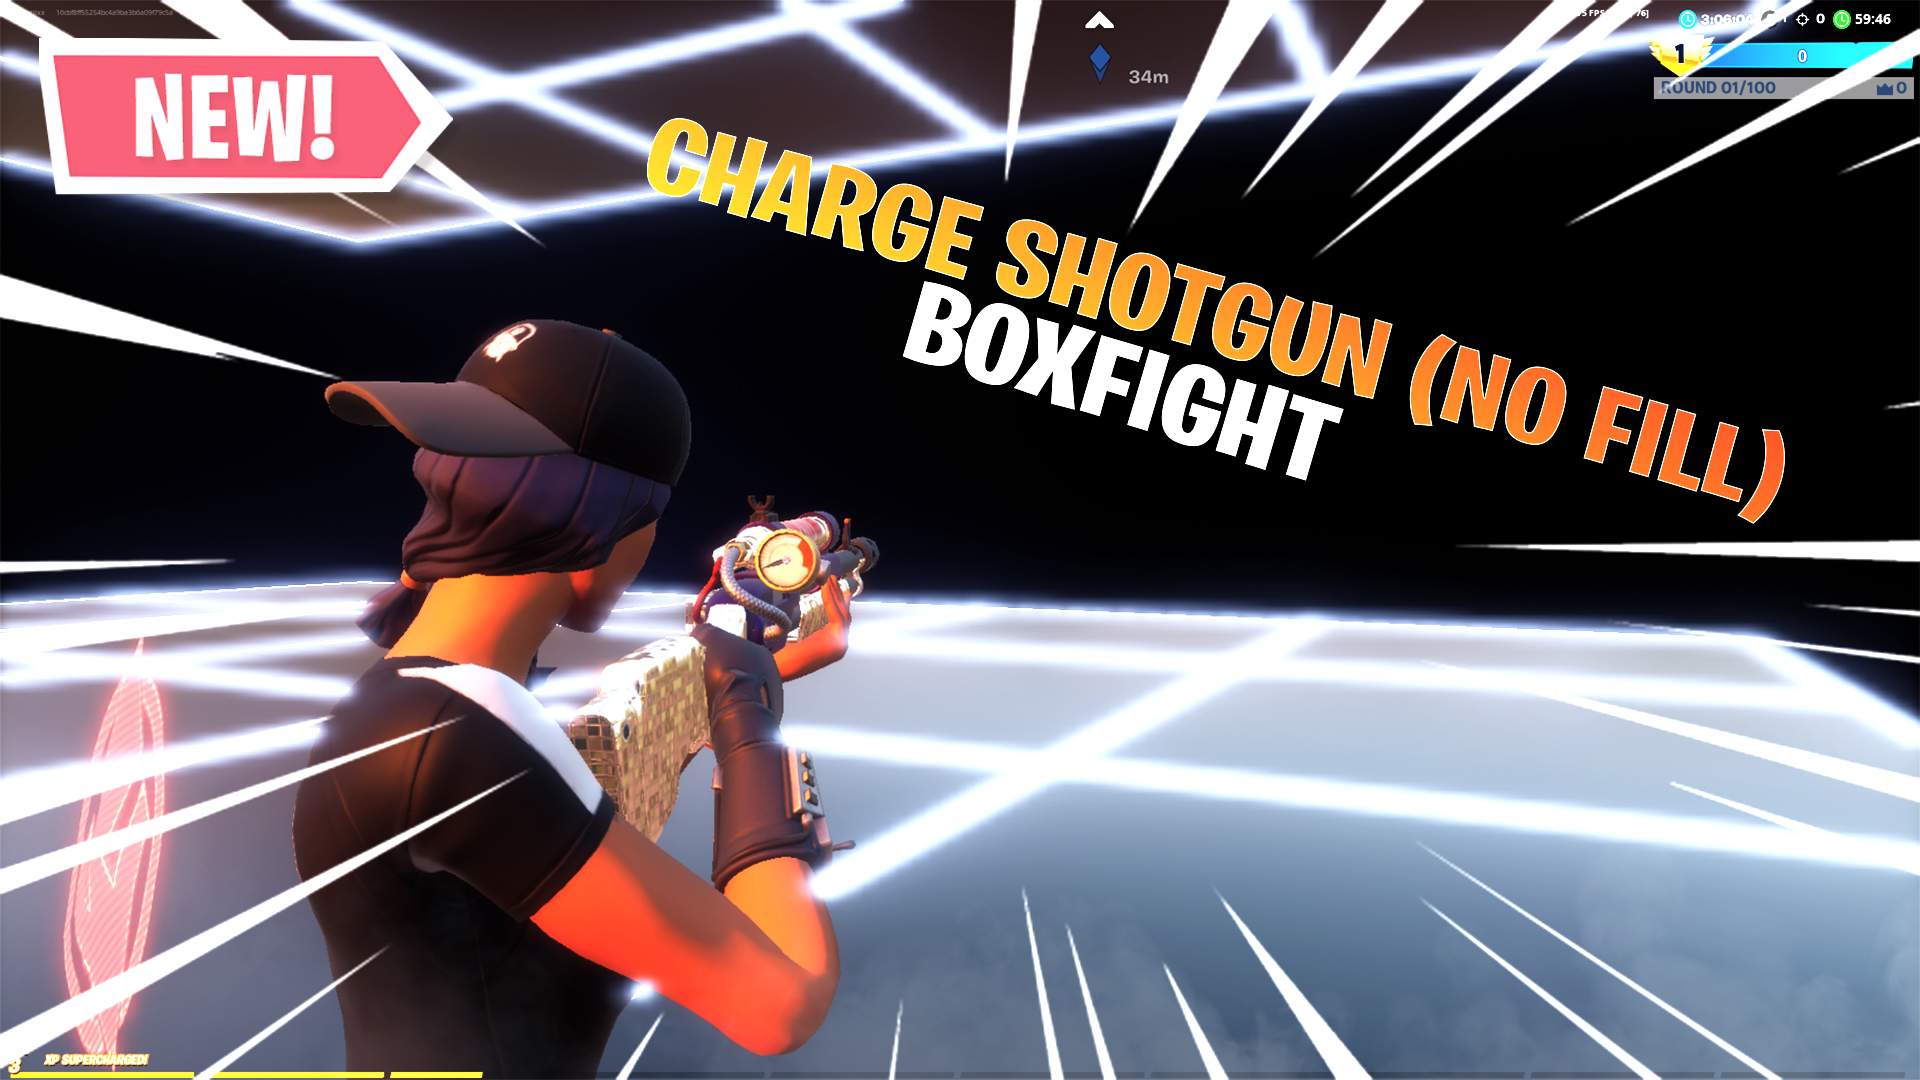 CHARGE SHOTGUN - BOX FIGHT (NO FILL)